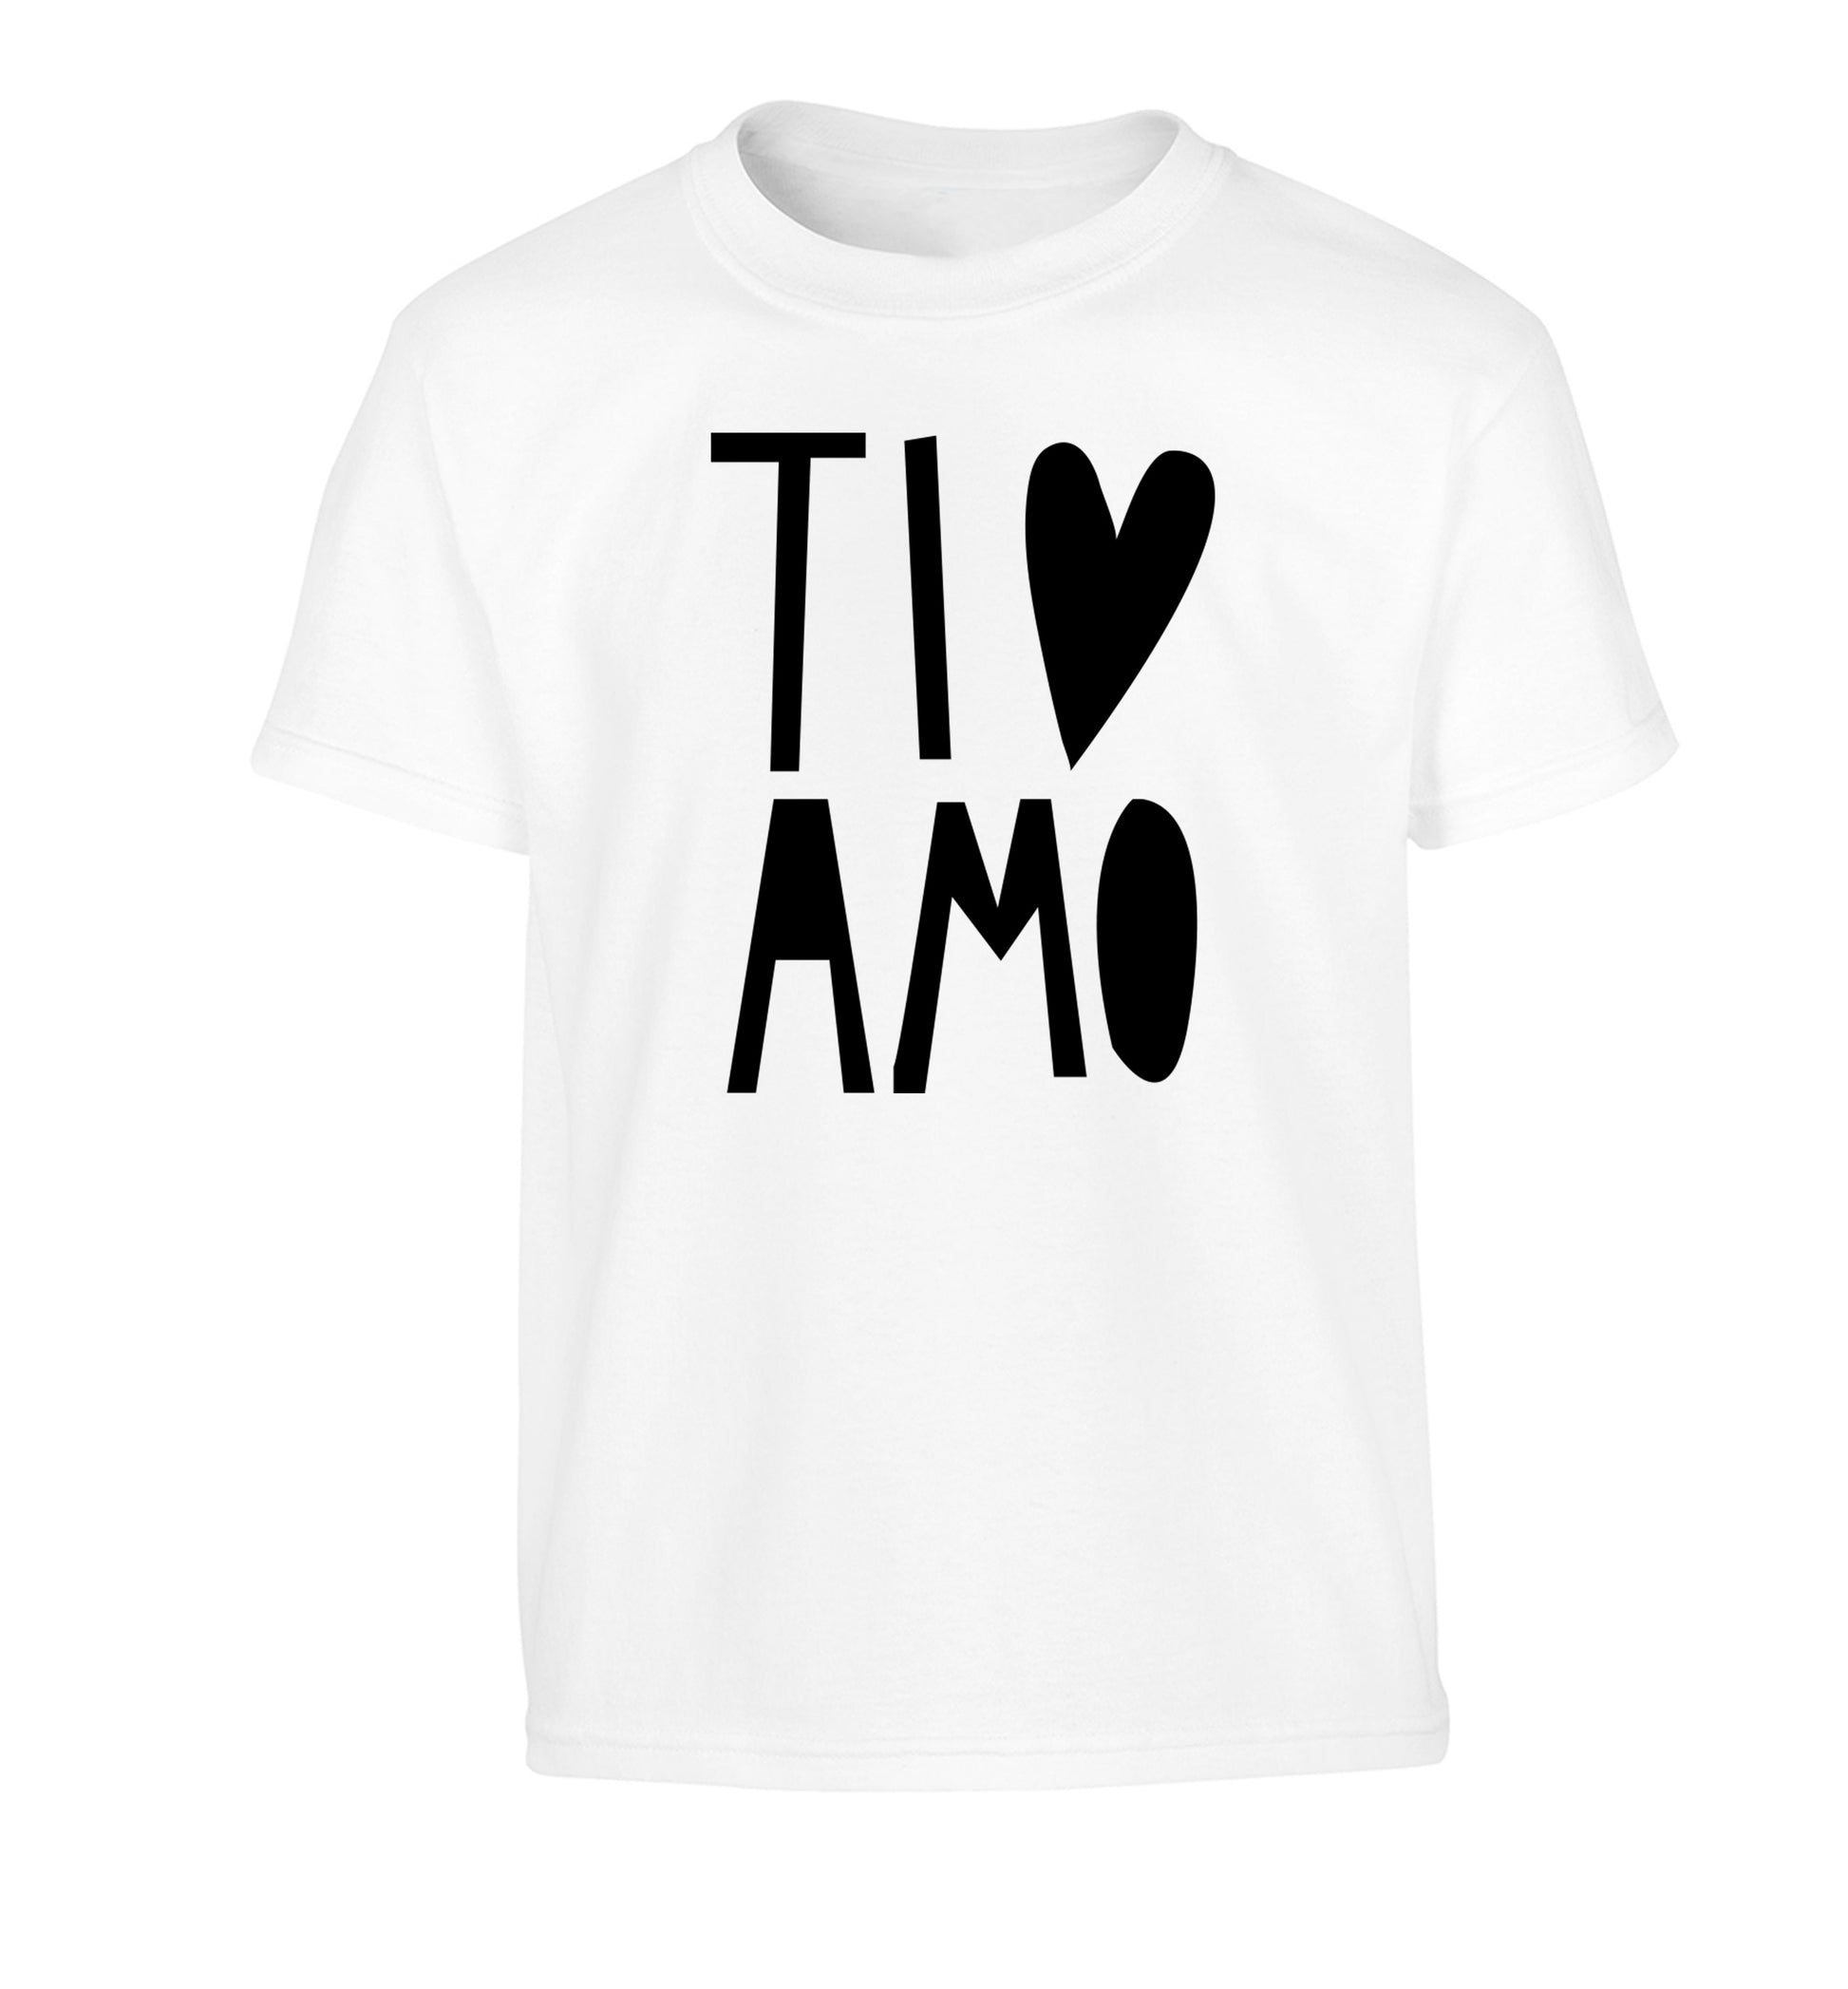 Ti amo - I love you Children's white Tshirt 12-13 Years